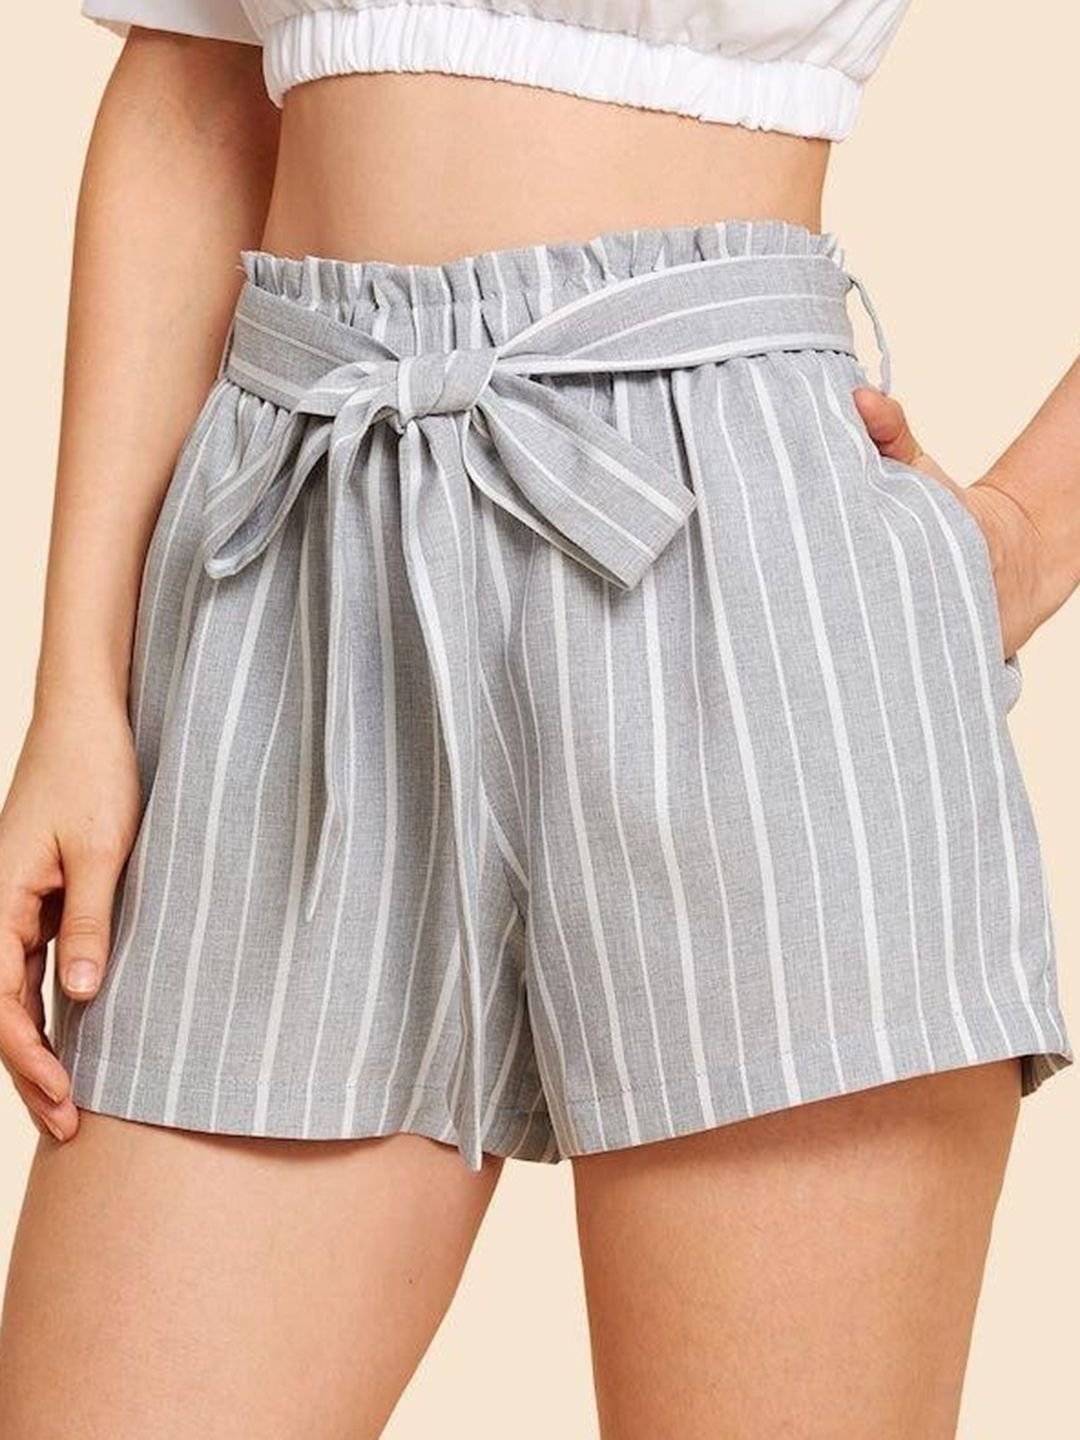 La Aimee Women Striped Shorts Price in India